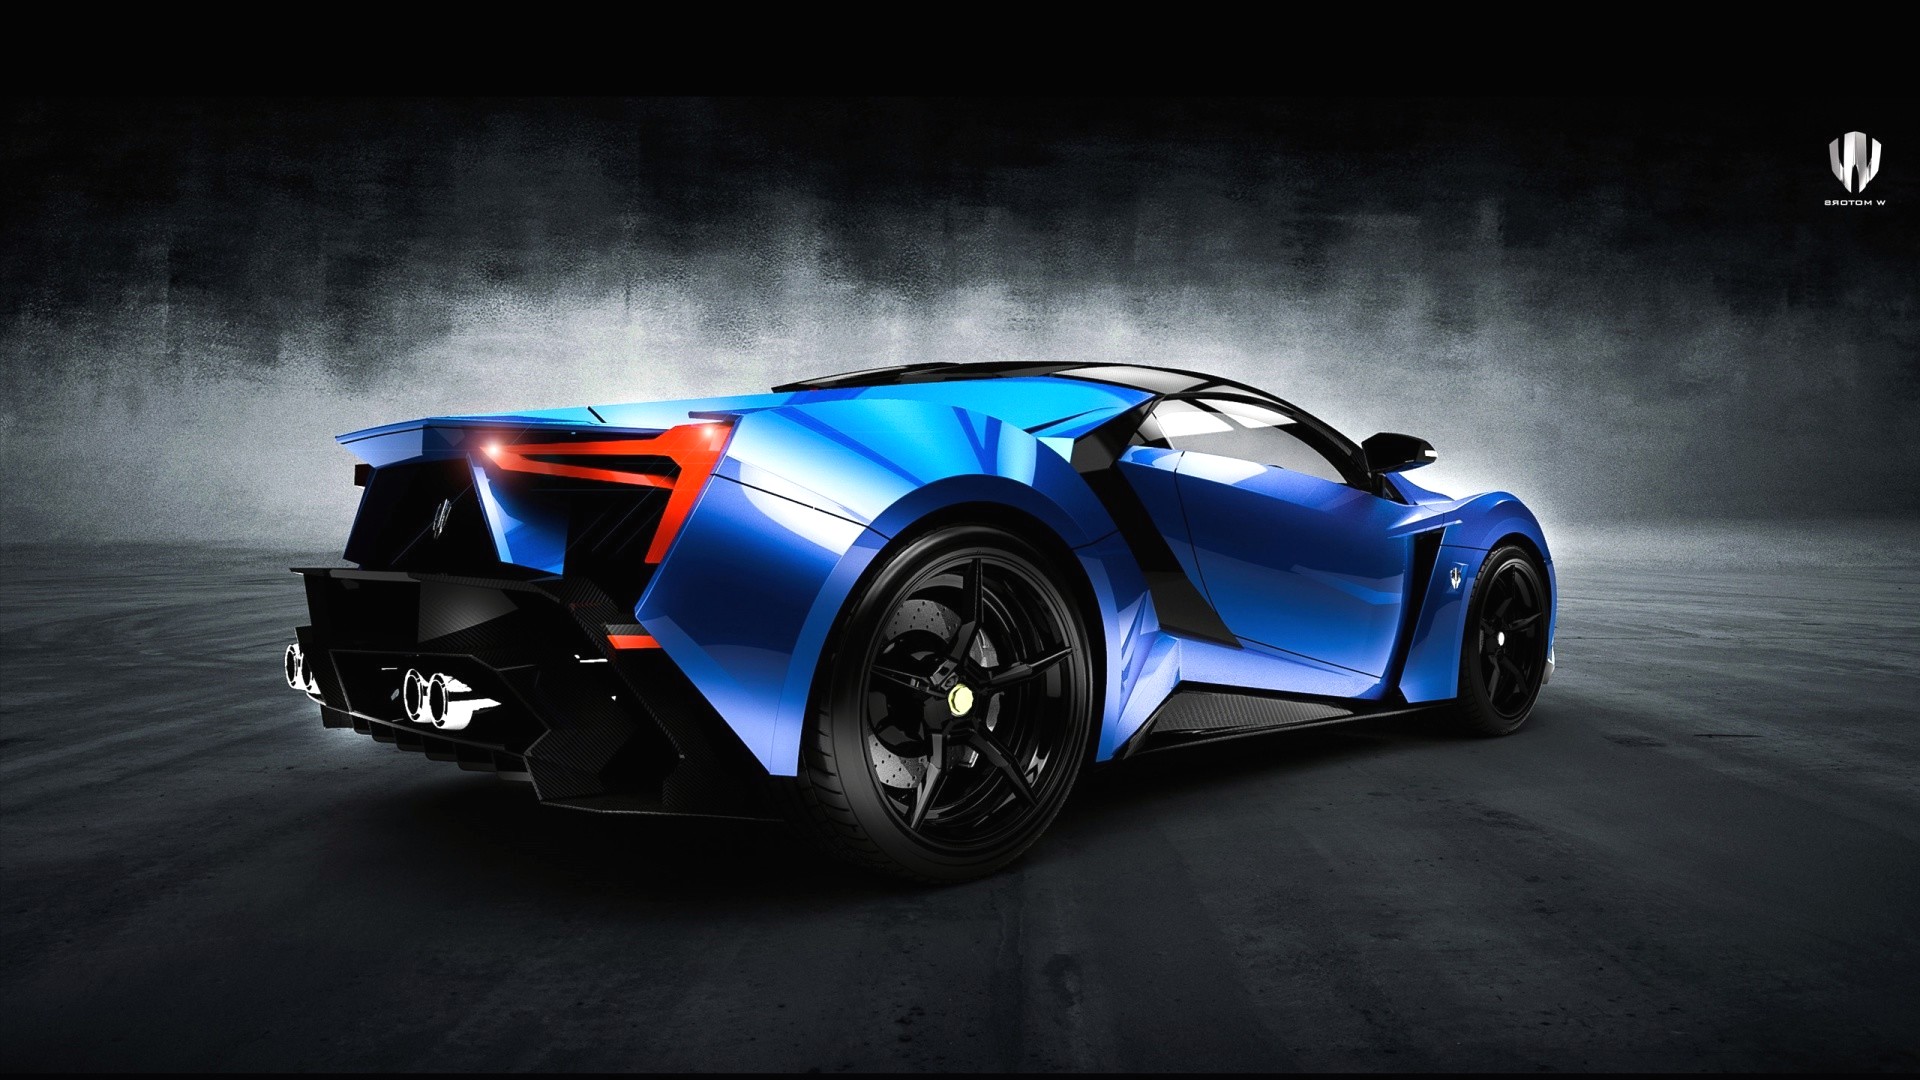 Bugatti Veyron Super Sport Wallpaper Image